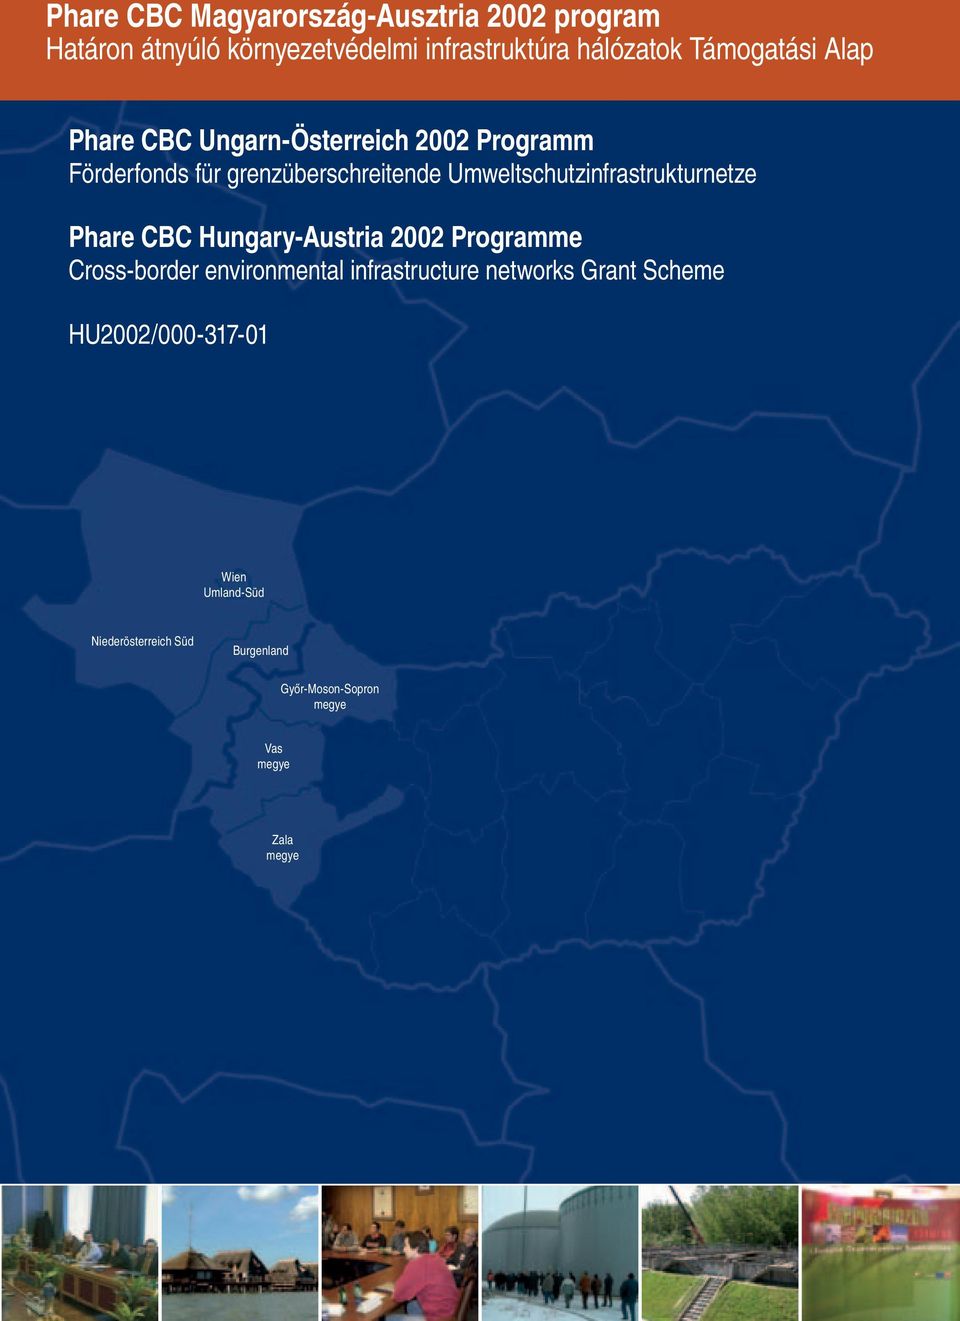 Umweltschutzinfrastrukturnetze Phare CBC Hungary-Austria 2002 Programme Cross-border environmental